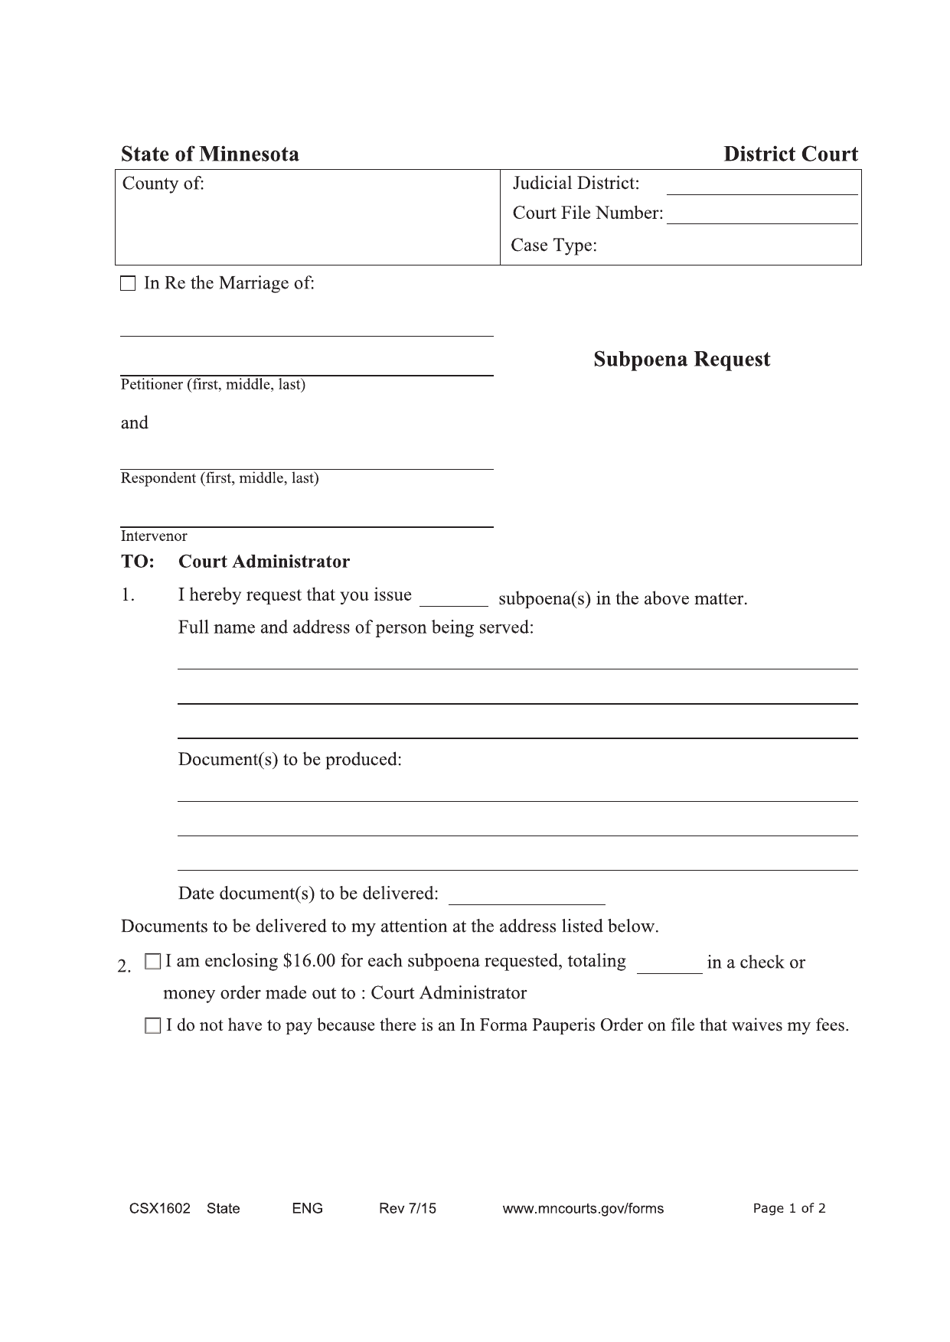 Form CSX1602 Request for Subpoena - Minnesota, Page 1